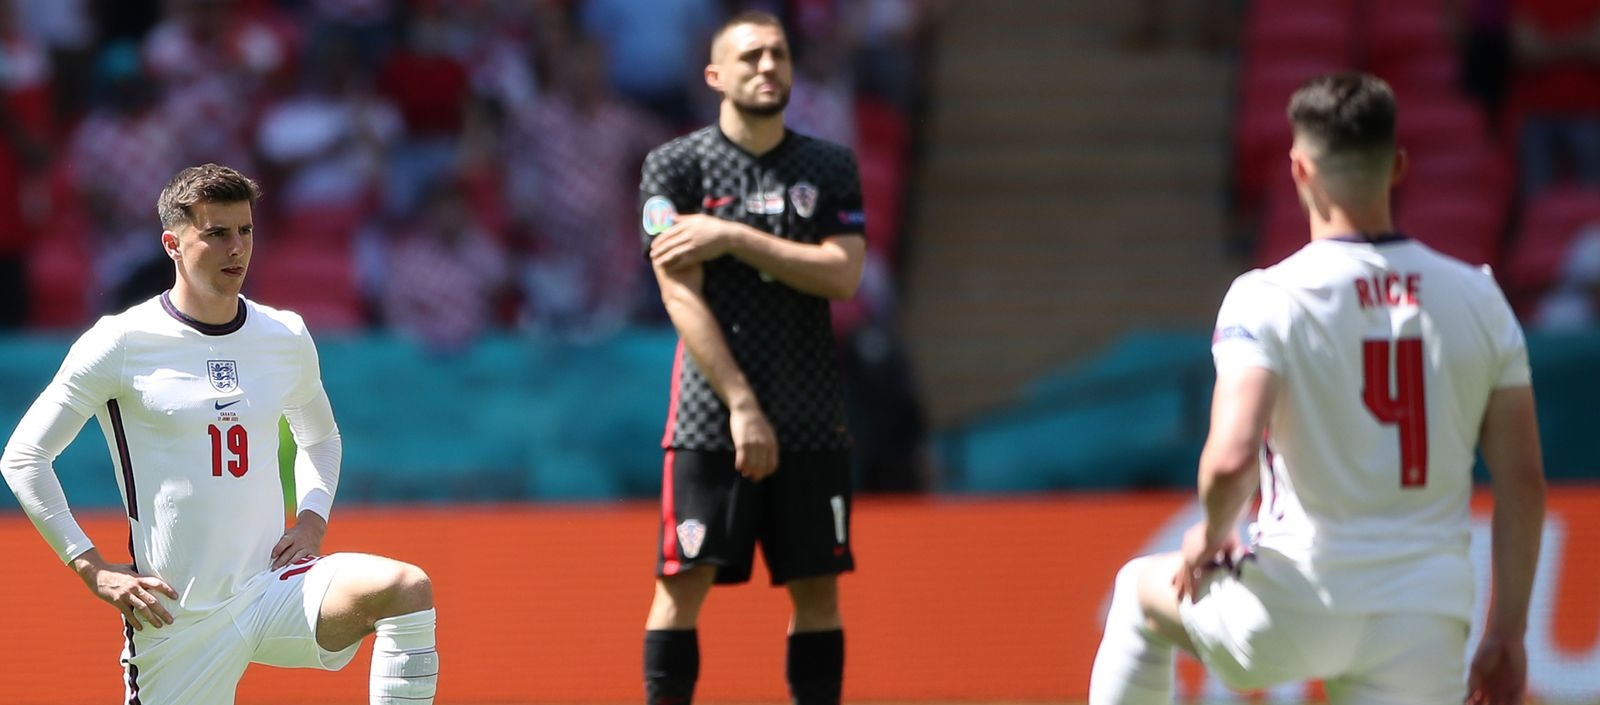 Euro 2020: Οι Άγγλοι γιούχαραν τους παίκτες επειδή γονάτισαν για το BLM – Οι Κροάτες αρνήθηκαν να γονατίσουν